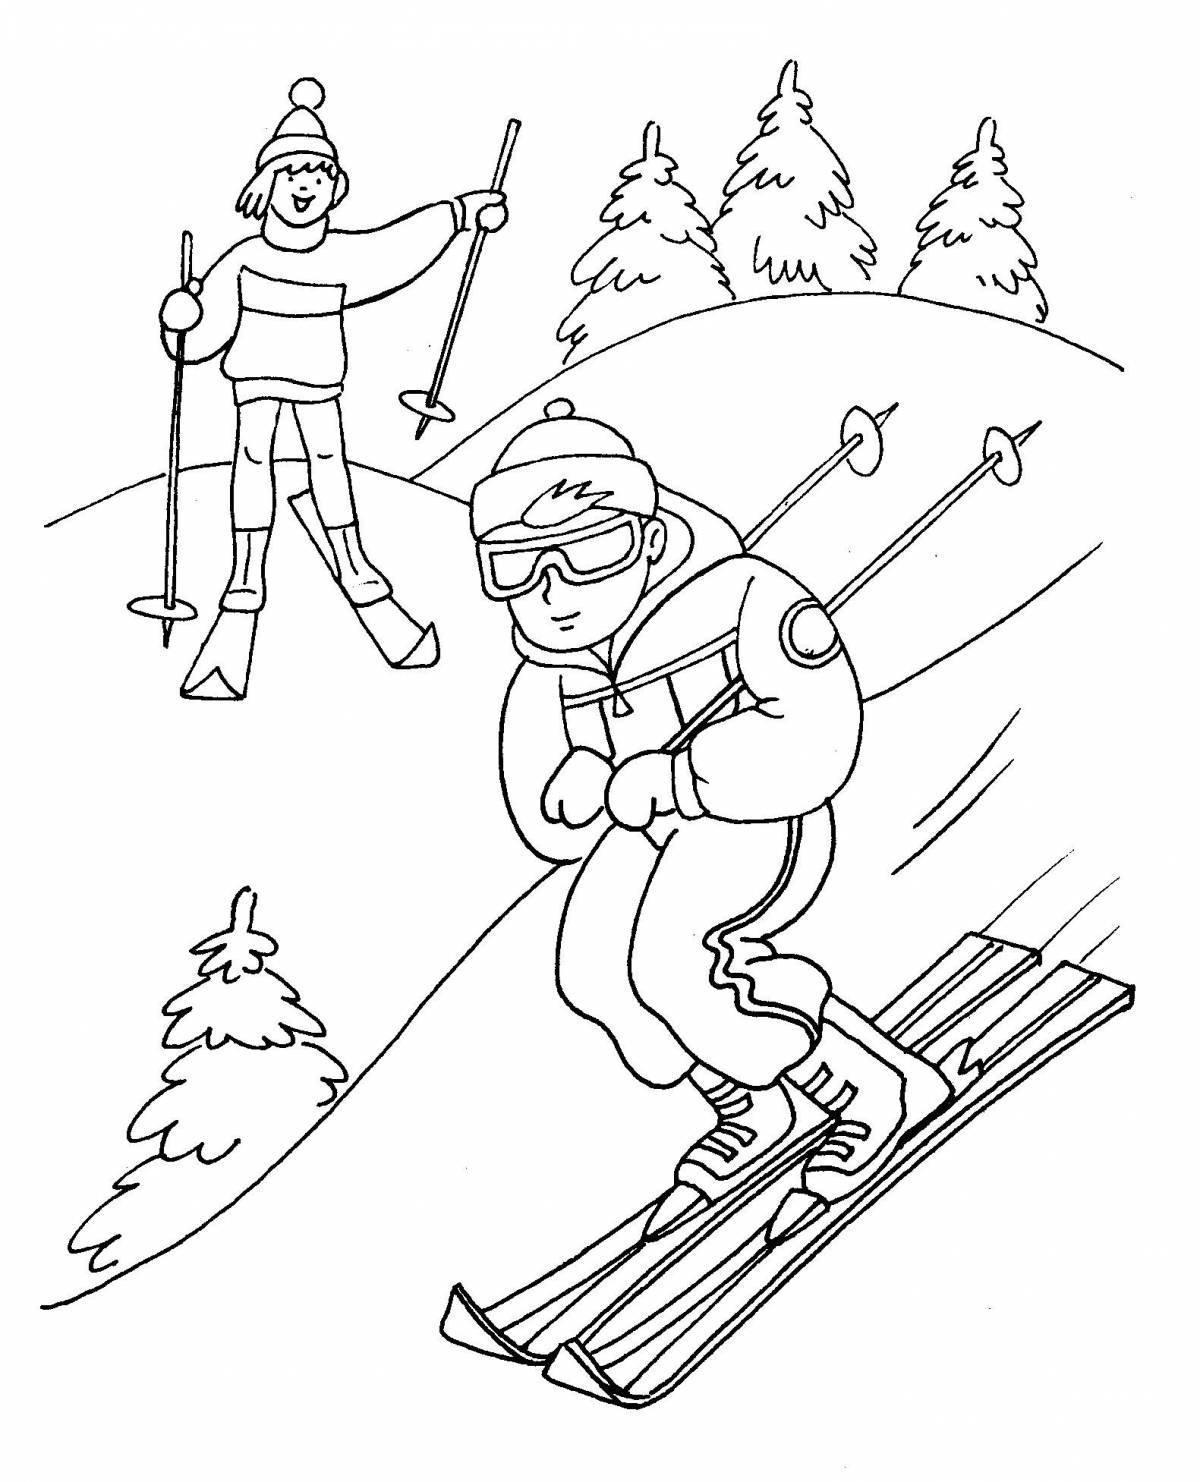 Joy skis for kids